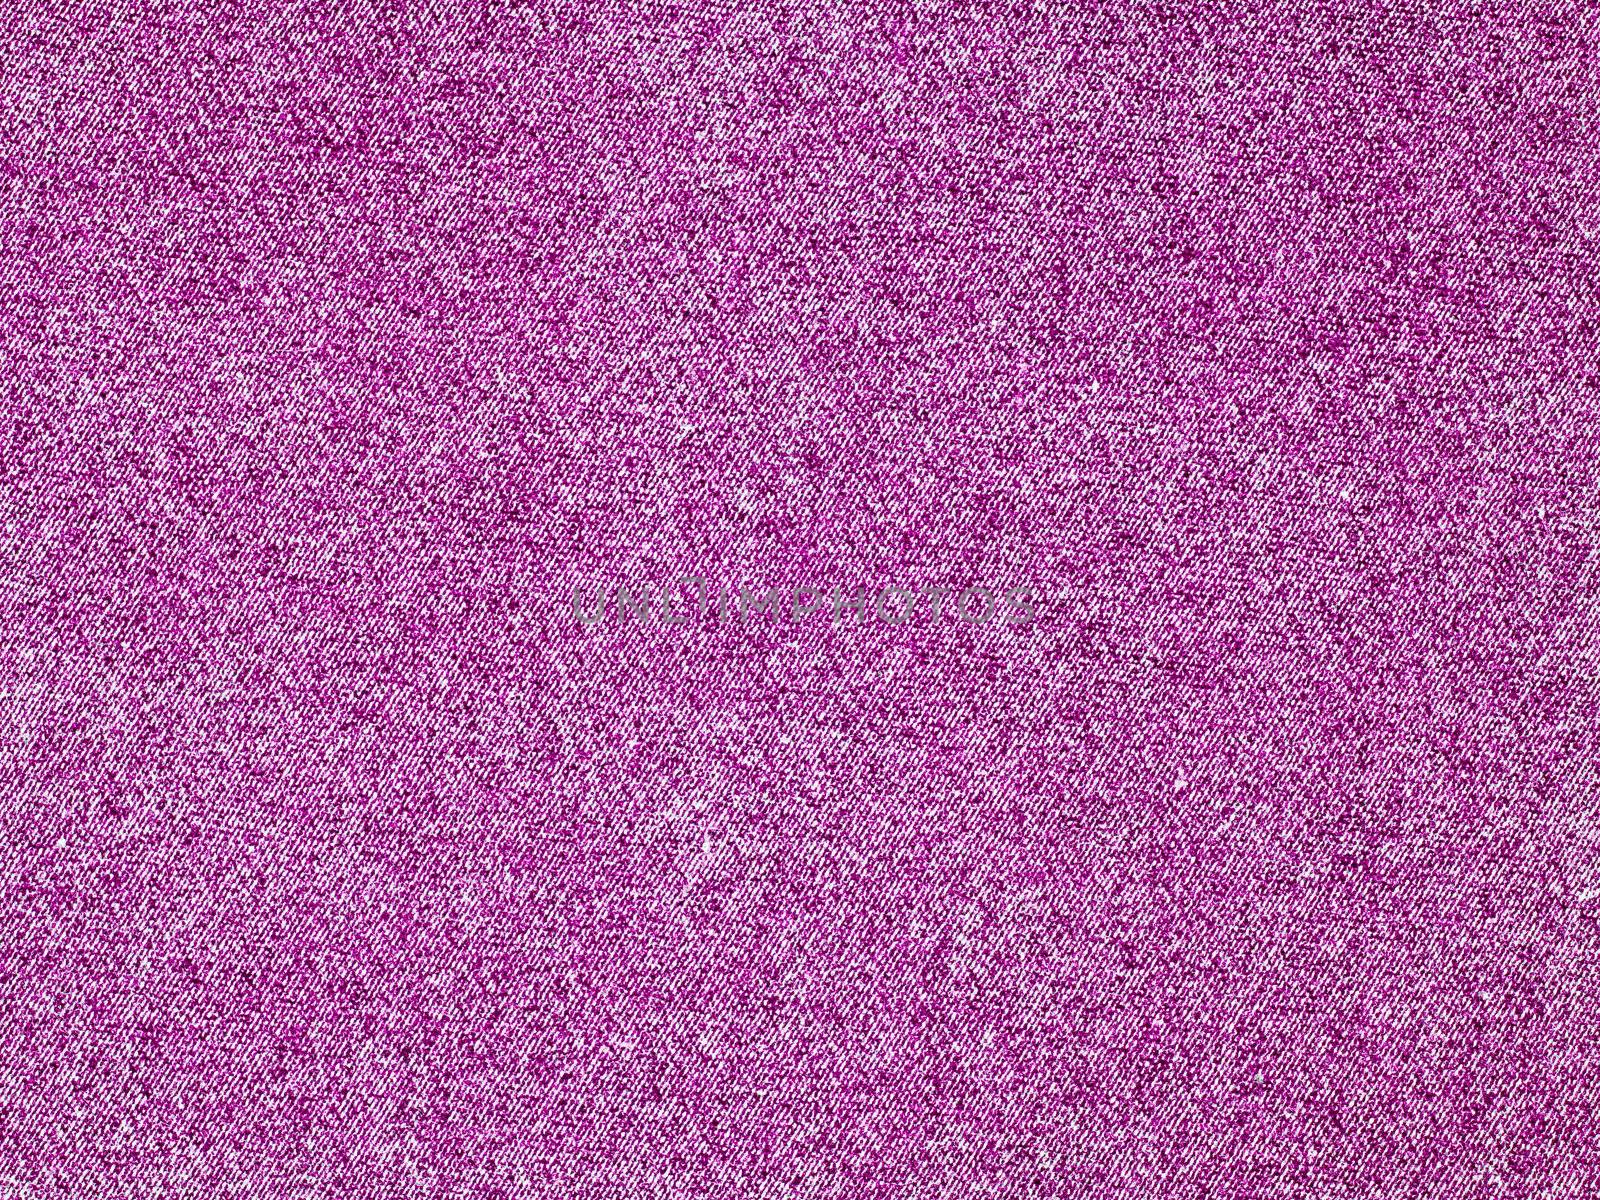 Full Frame Background of a Purple Denim Fabric Pattern